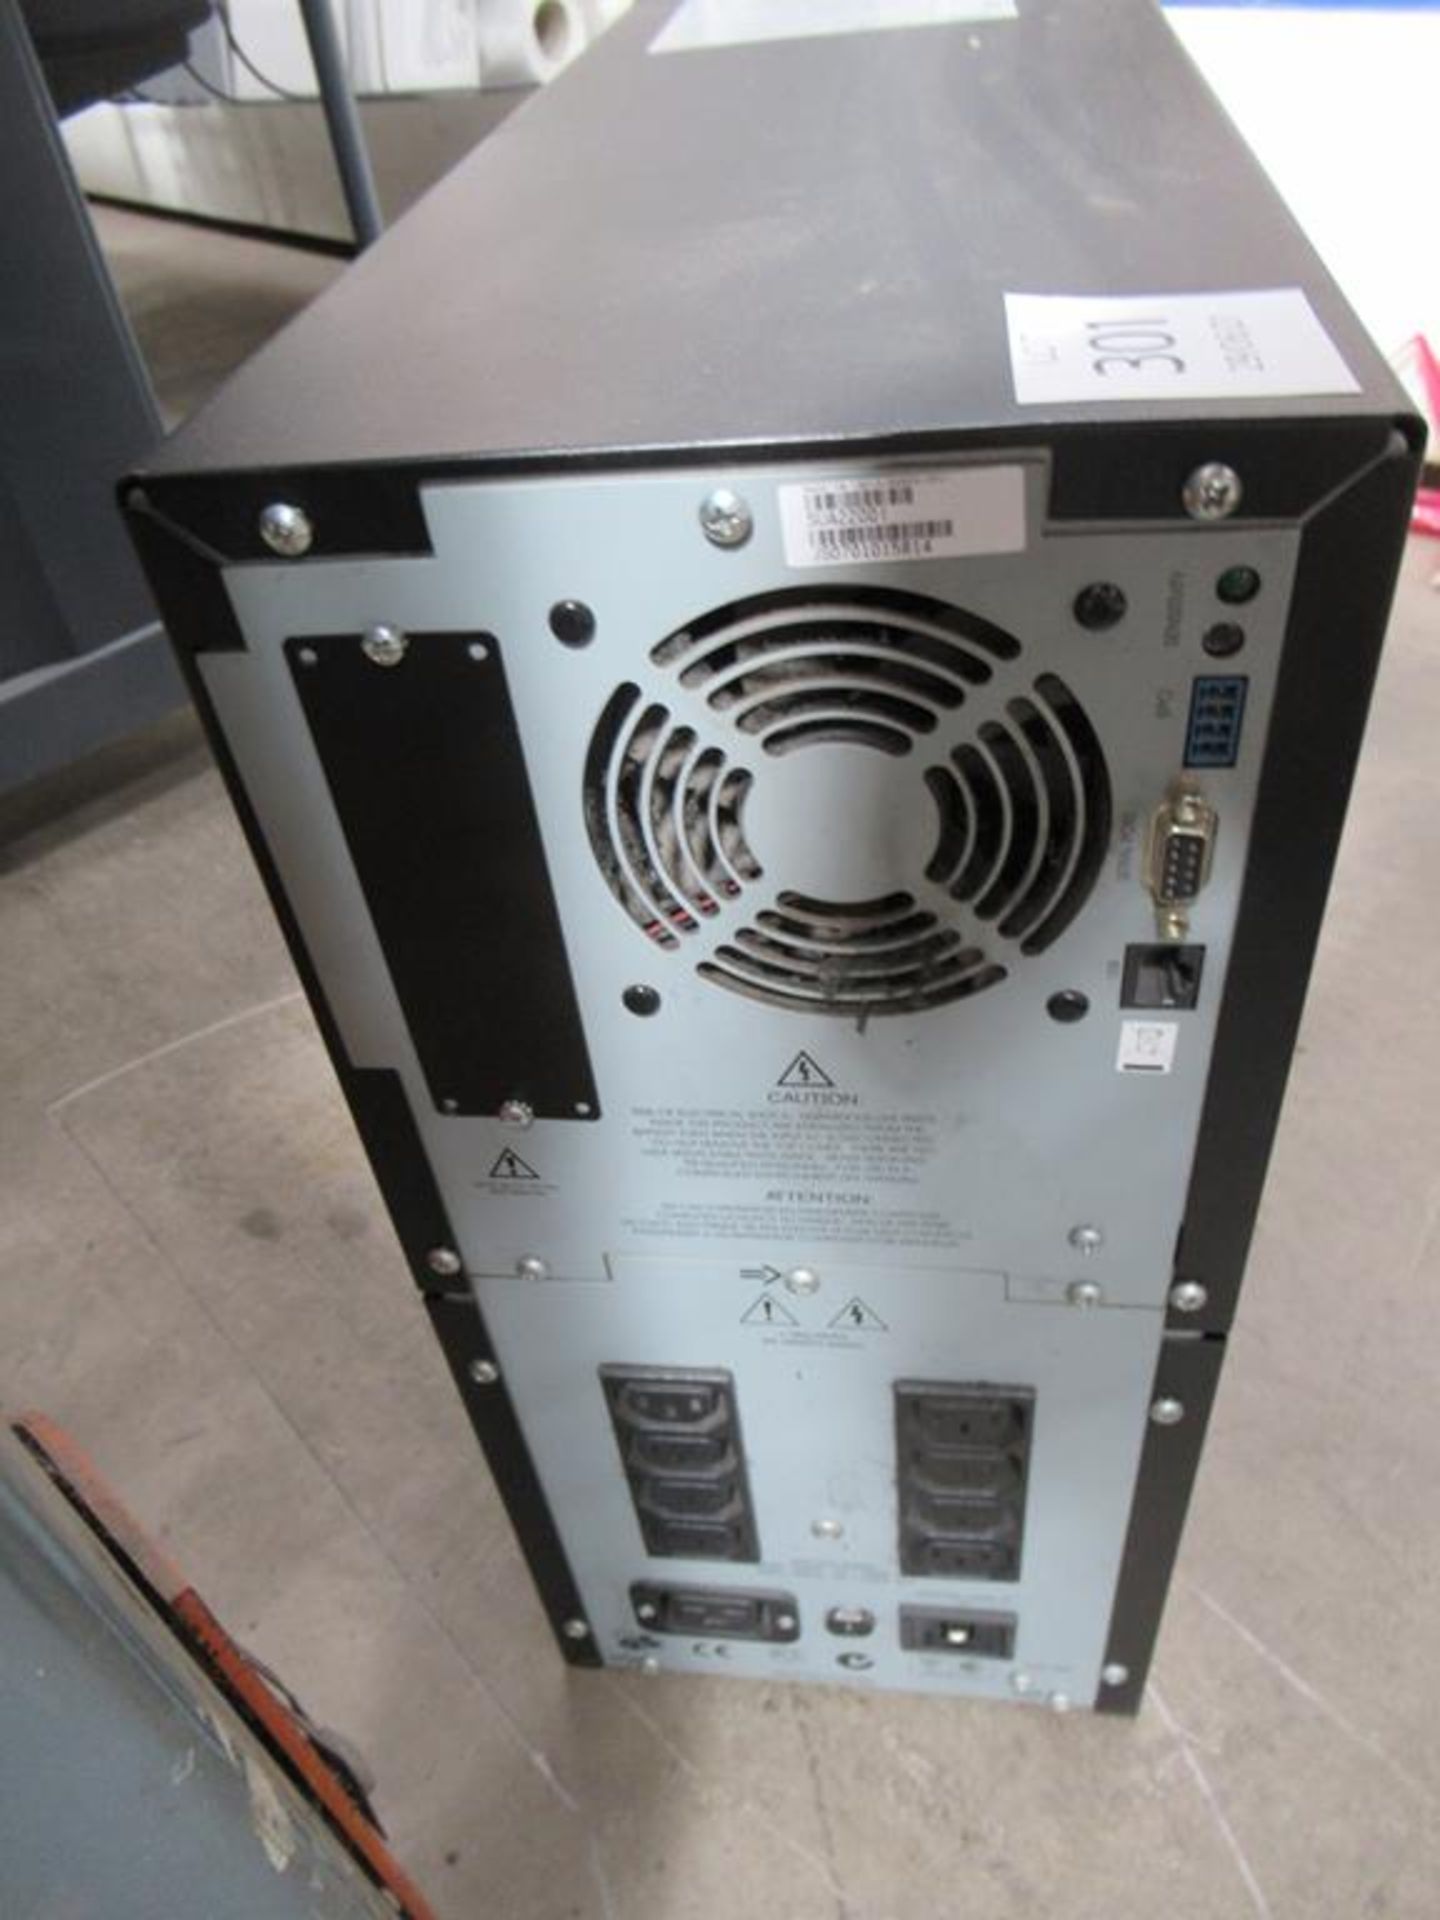 APC Smart-UPS 2200 Tower Power Supply - Image 3 of 3